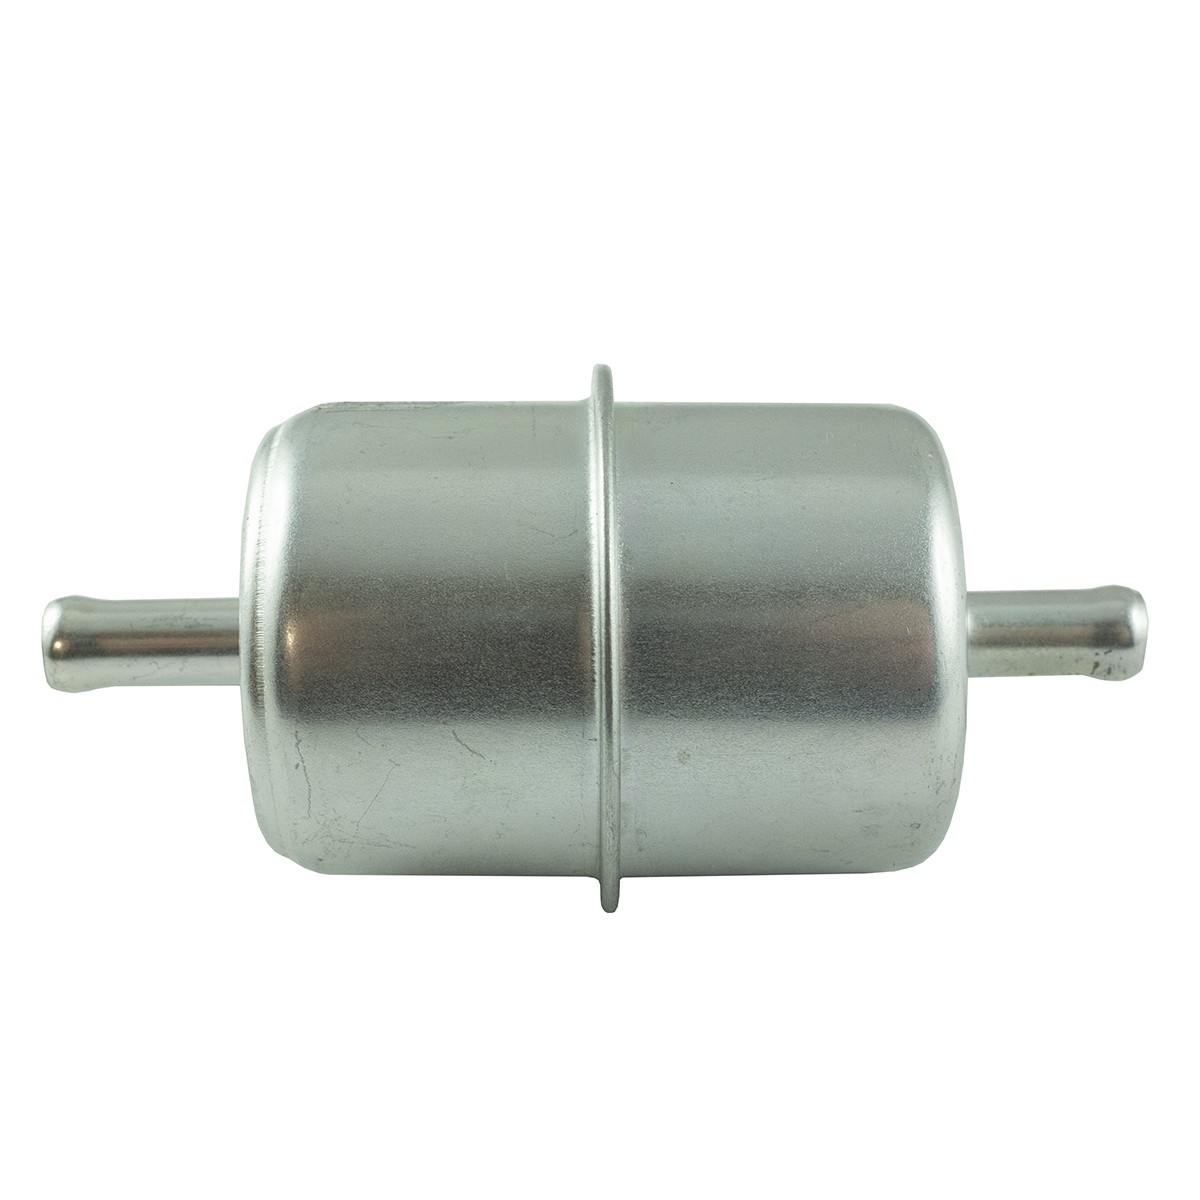 Palivový filter (predfilter), 102 x 44/51 mm, Mitsubishi S3L2, Startrac 263/273, 39204421